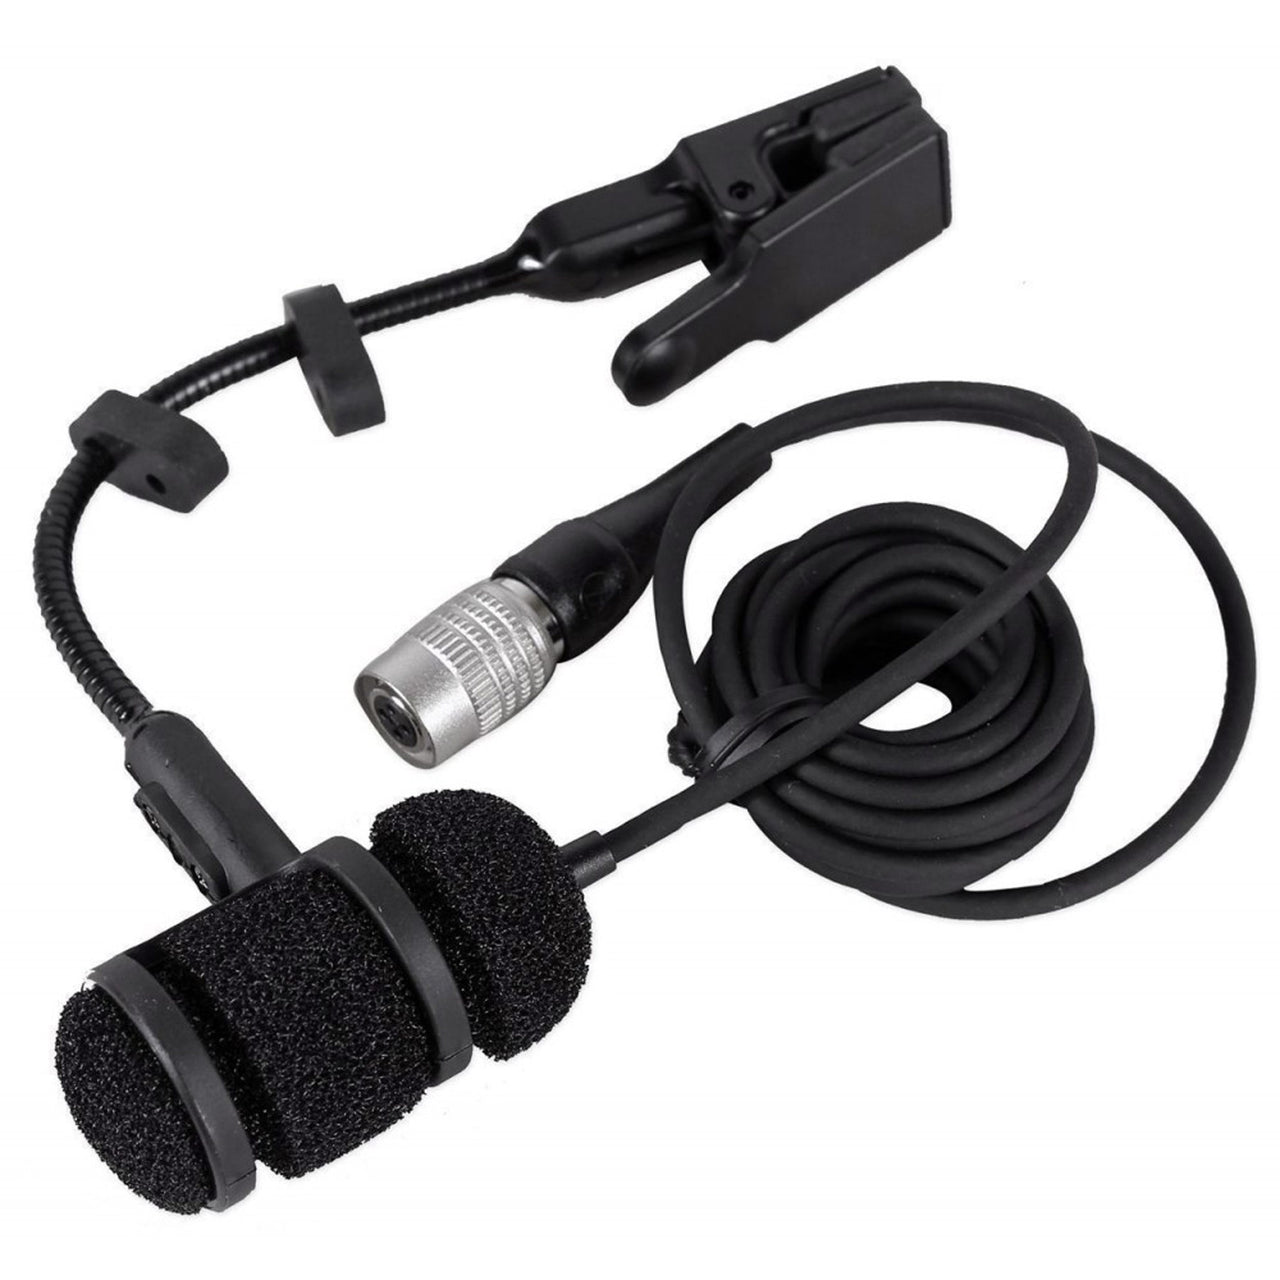 Microfono Audiotechnica De Condensador Con Clip Instrumento, Pro35cw